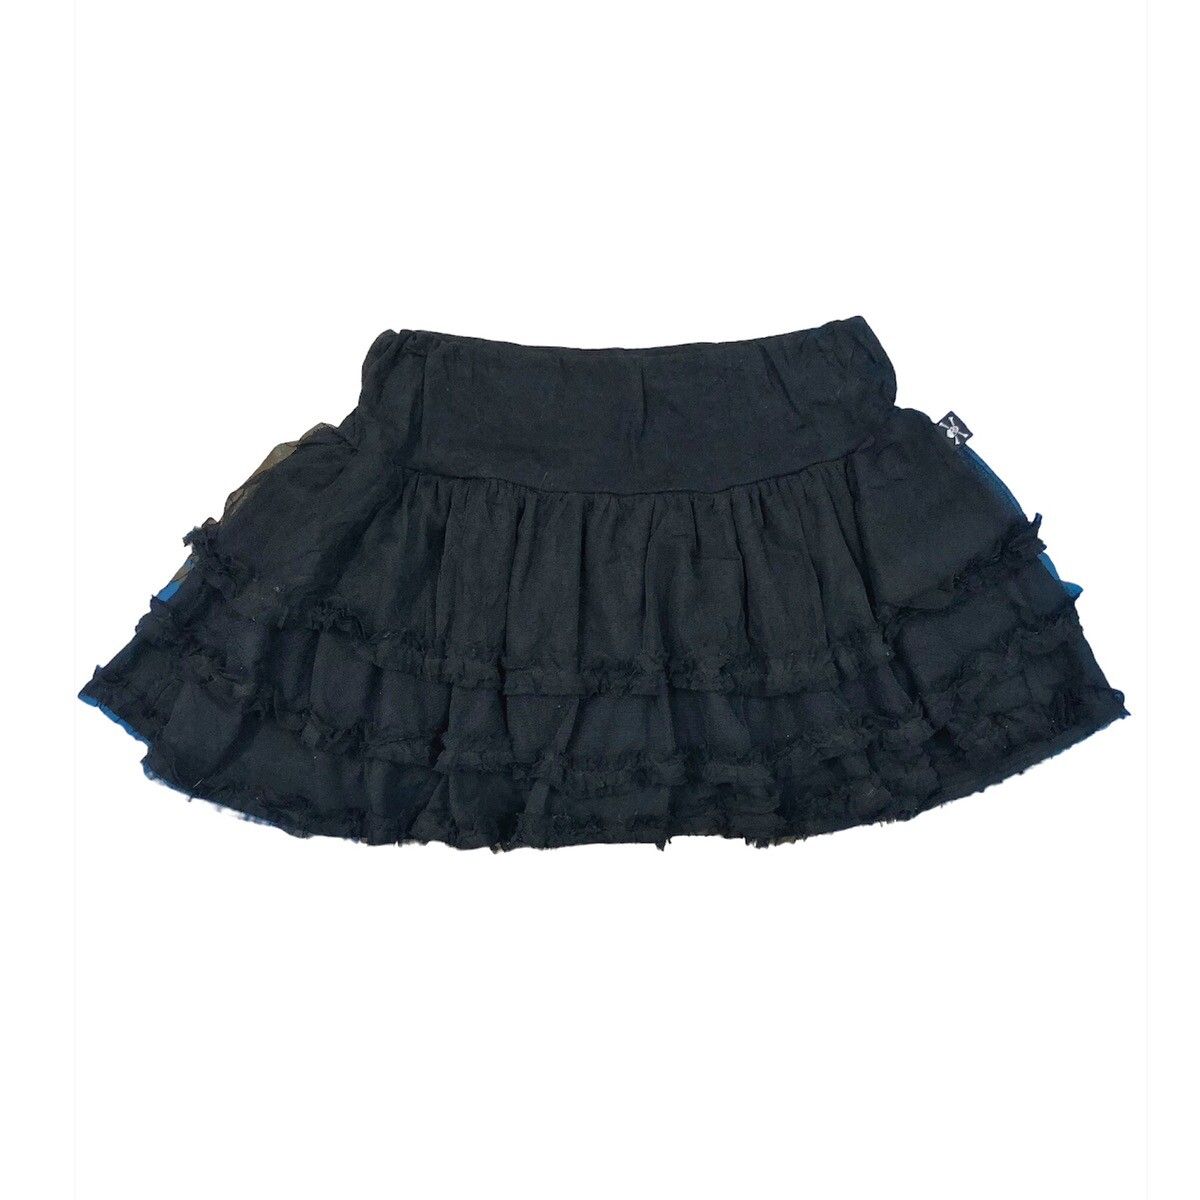 Japanese Brand - Superlovers Mini Skirt - 2